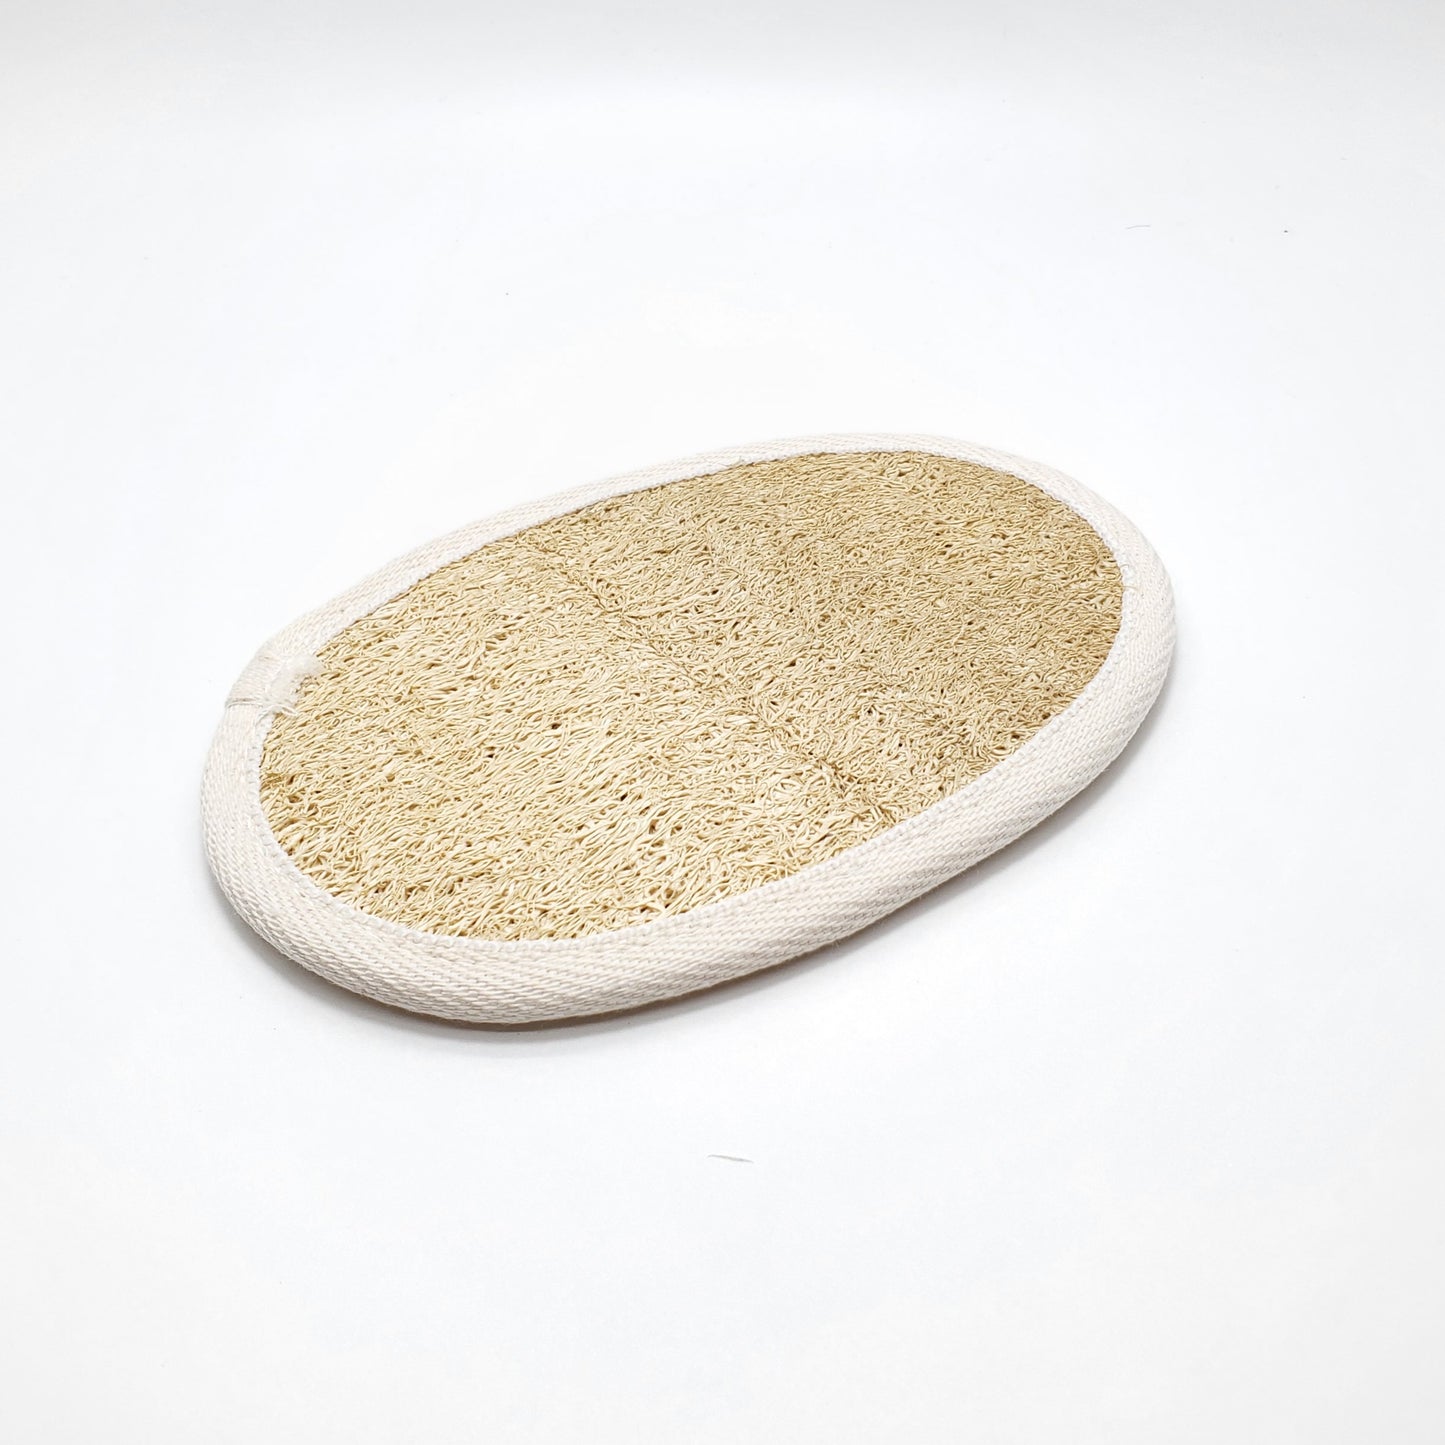 Loofah Body Sponge for Natural Exfoliation - Gentle Scrubbing